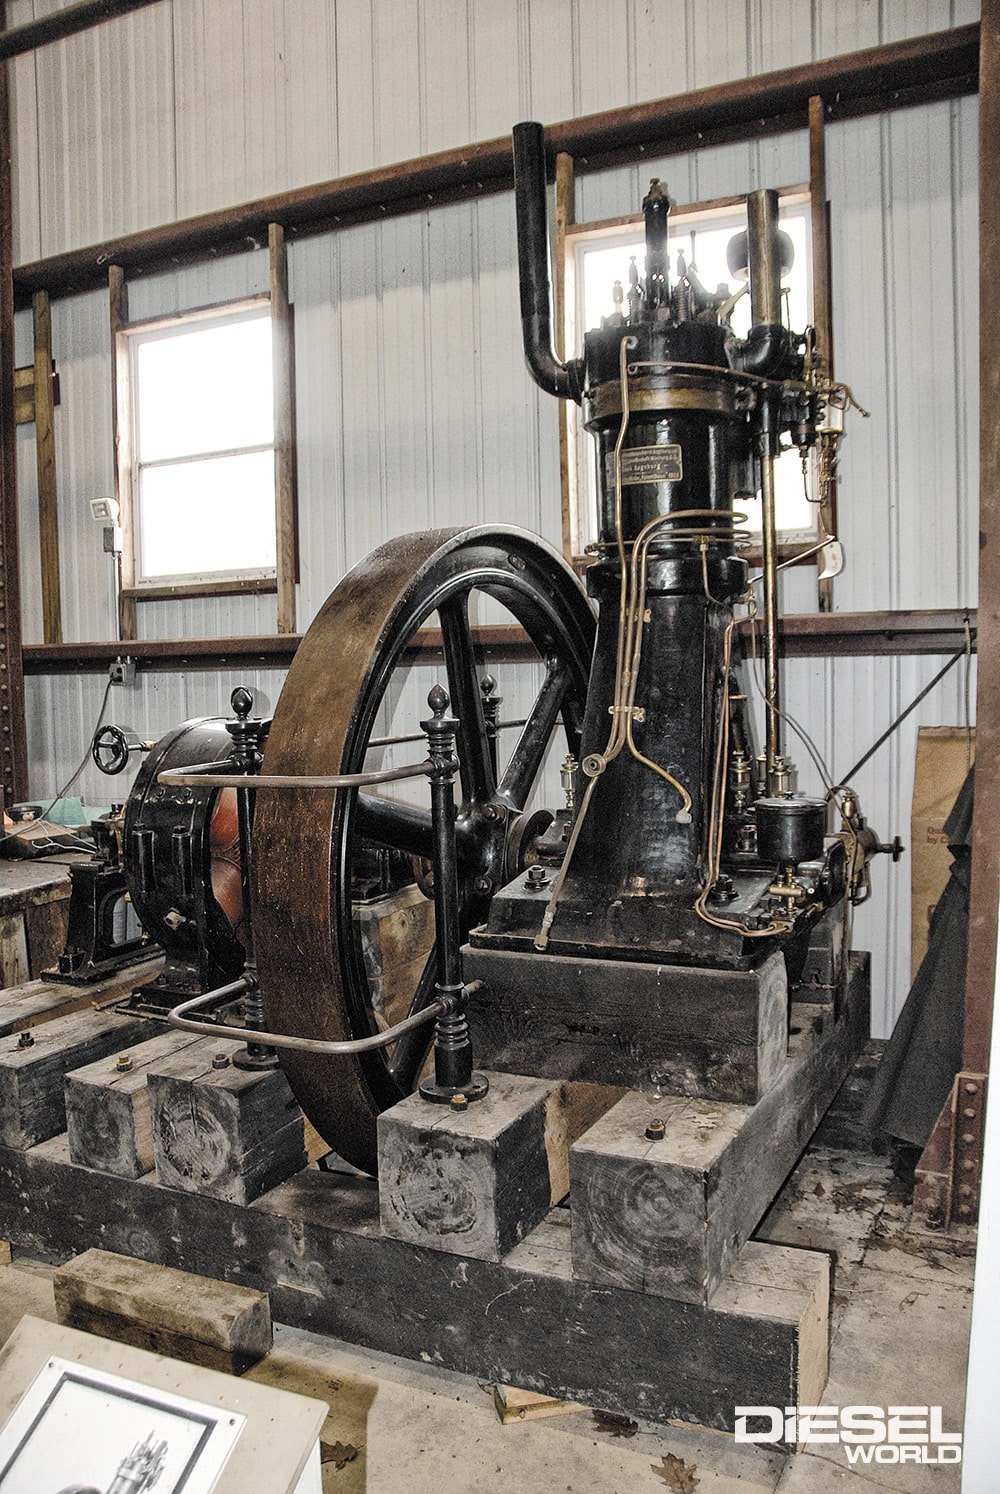 Diesel 101: History & Invention of the Diesel Engine